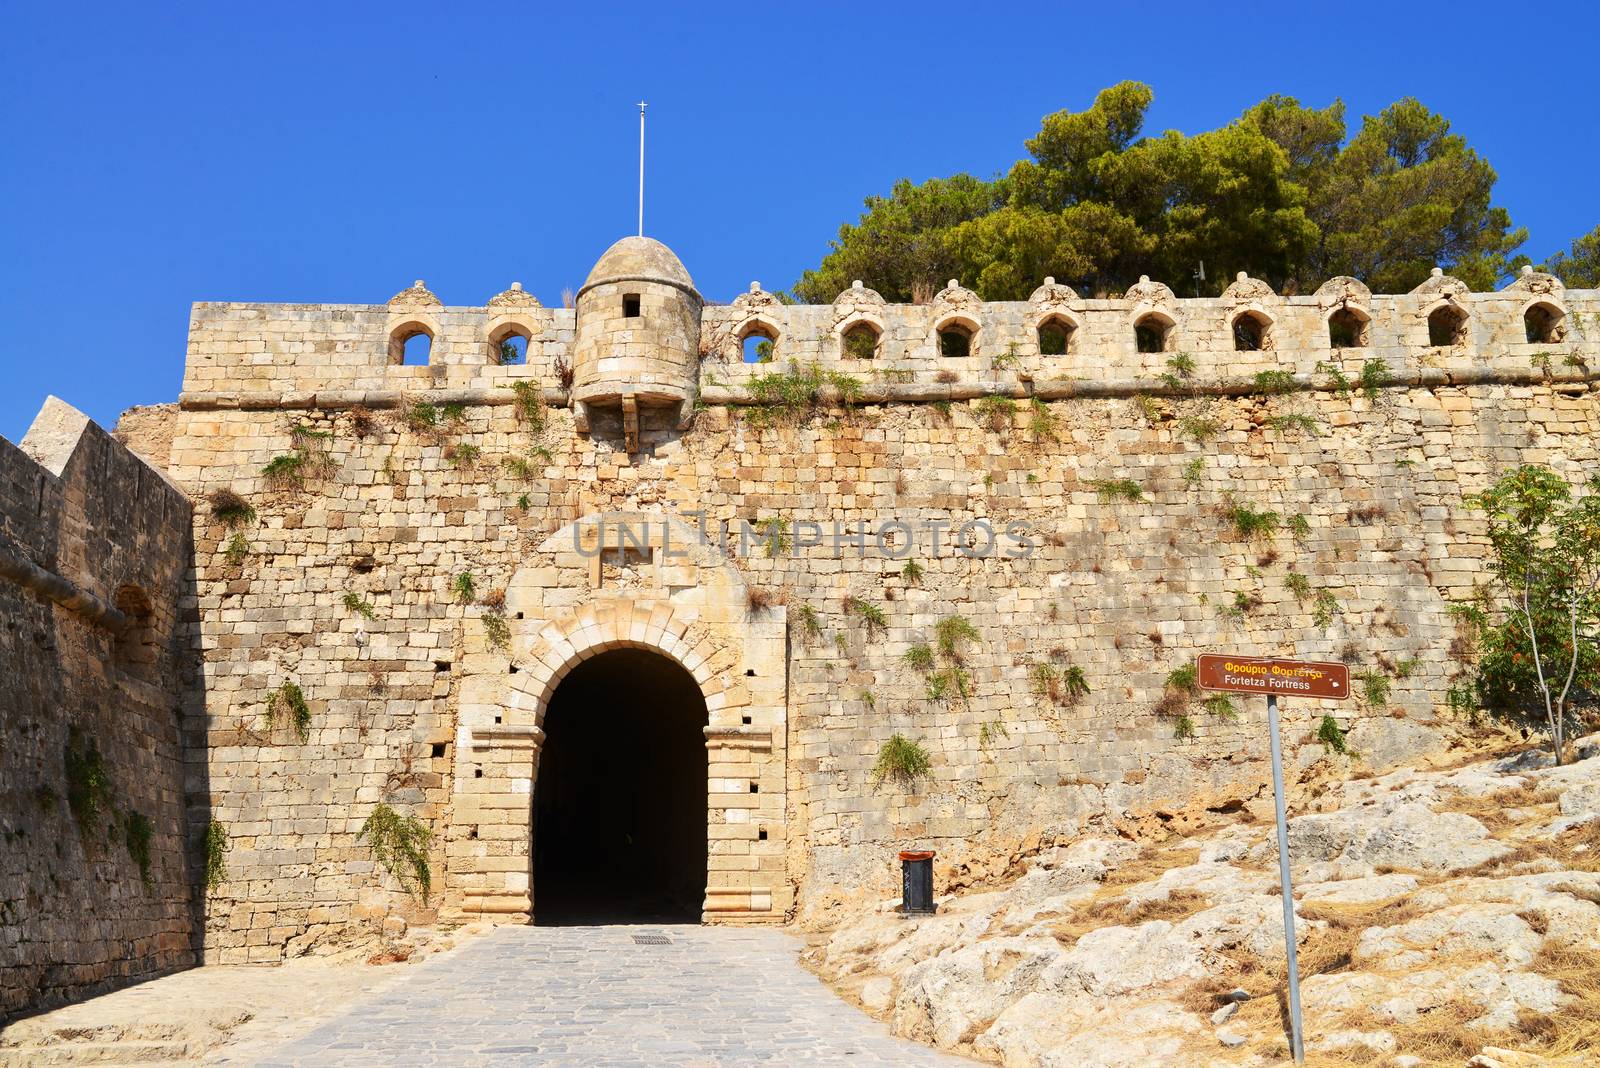 Rethymno Fortezza fortress main gate by tony4urban